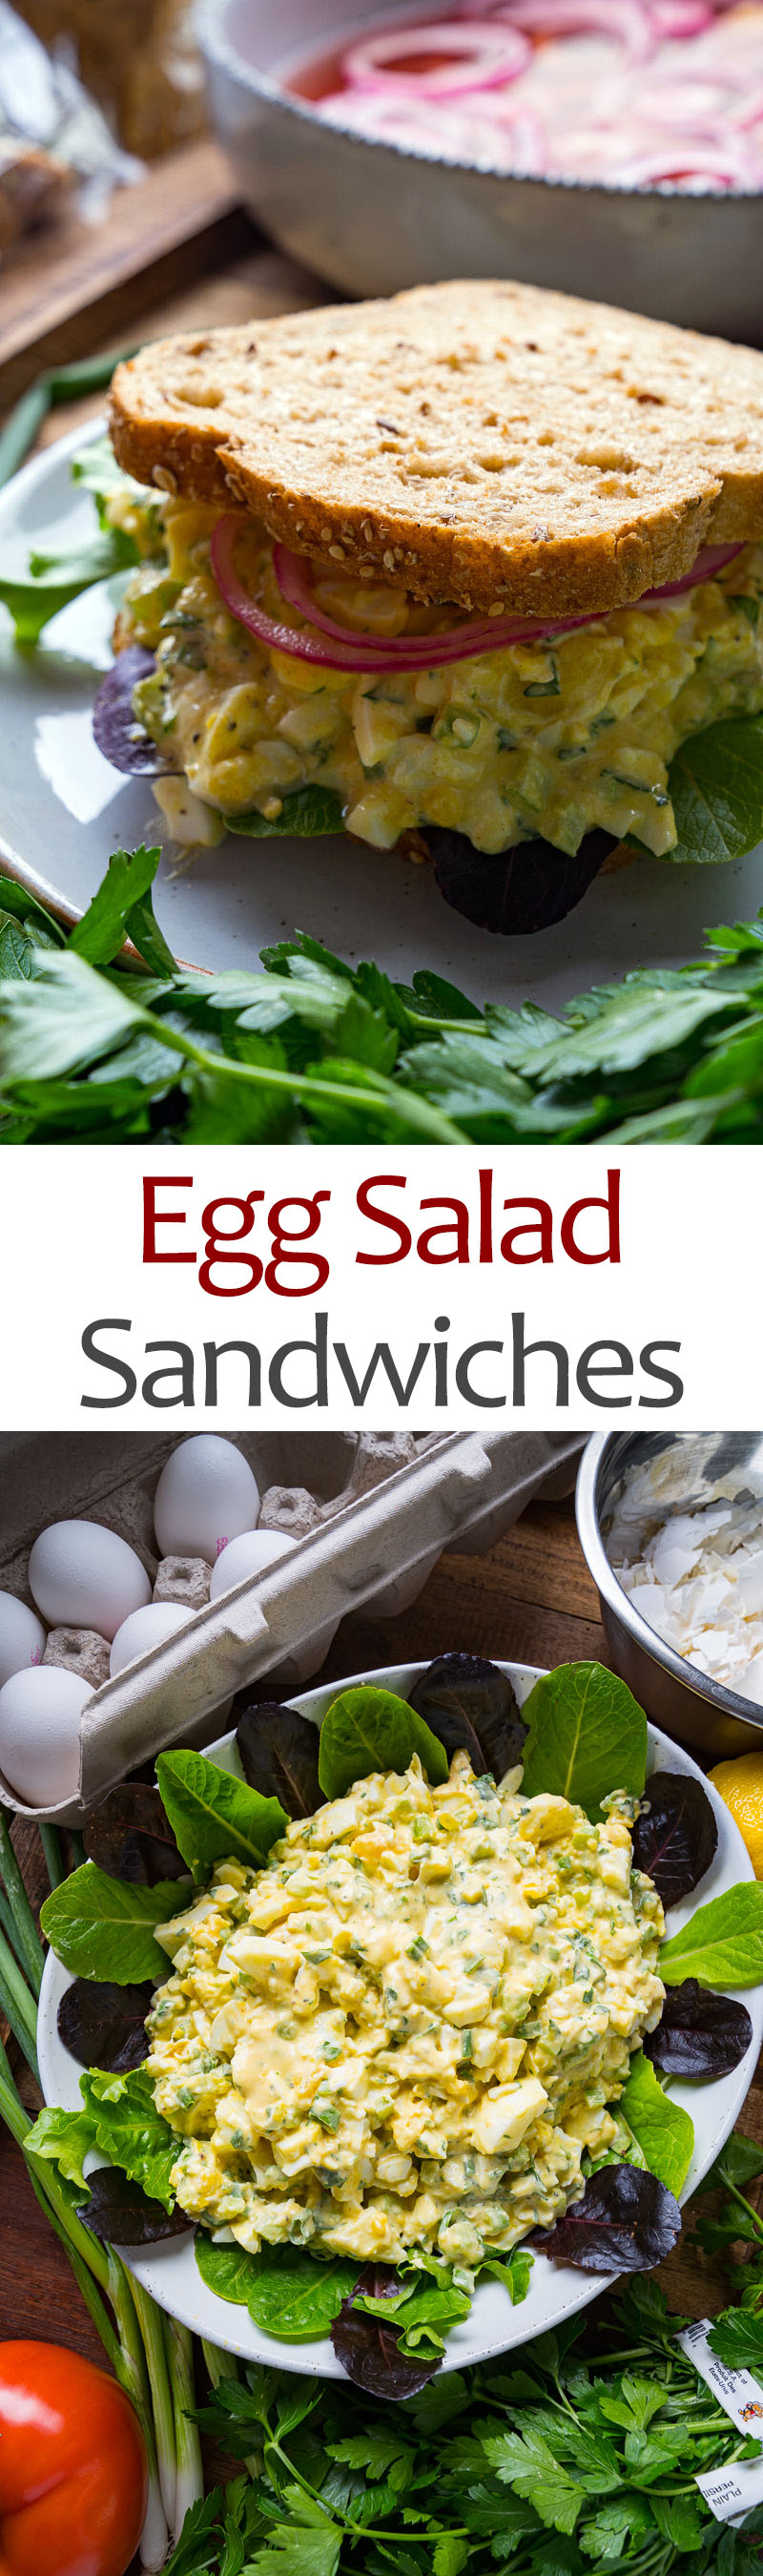 Egg Salad Sandwich - Closet Cooking